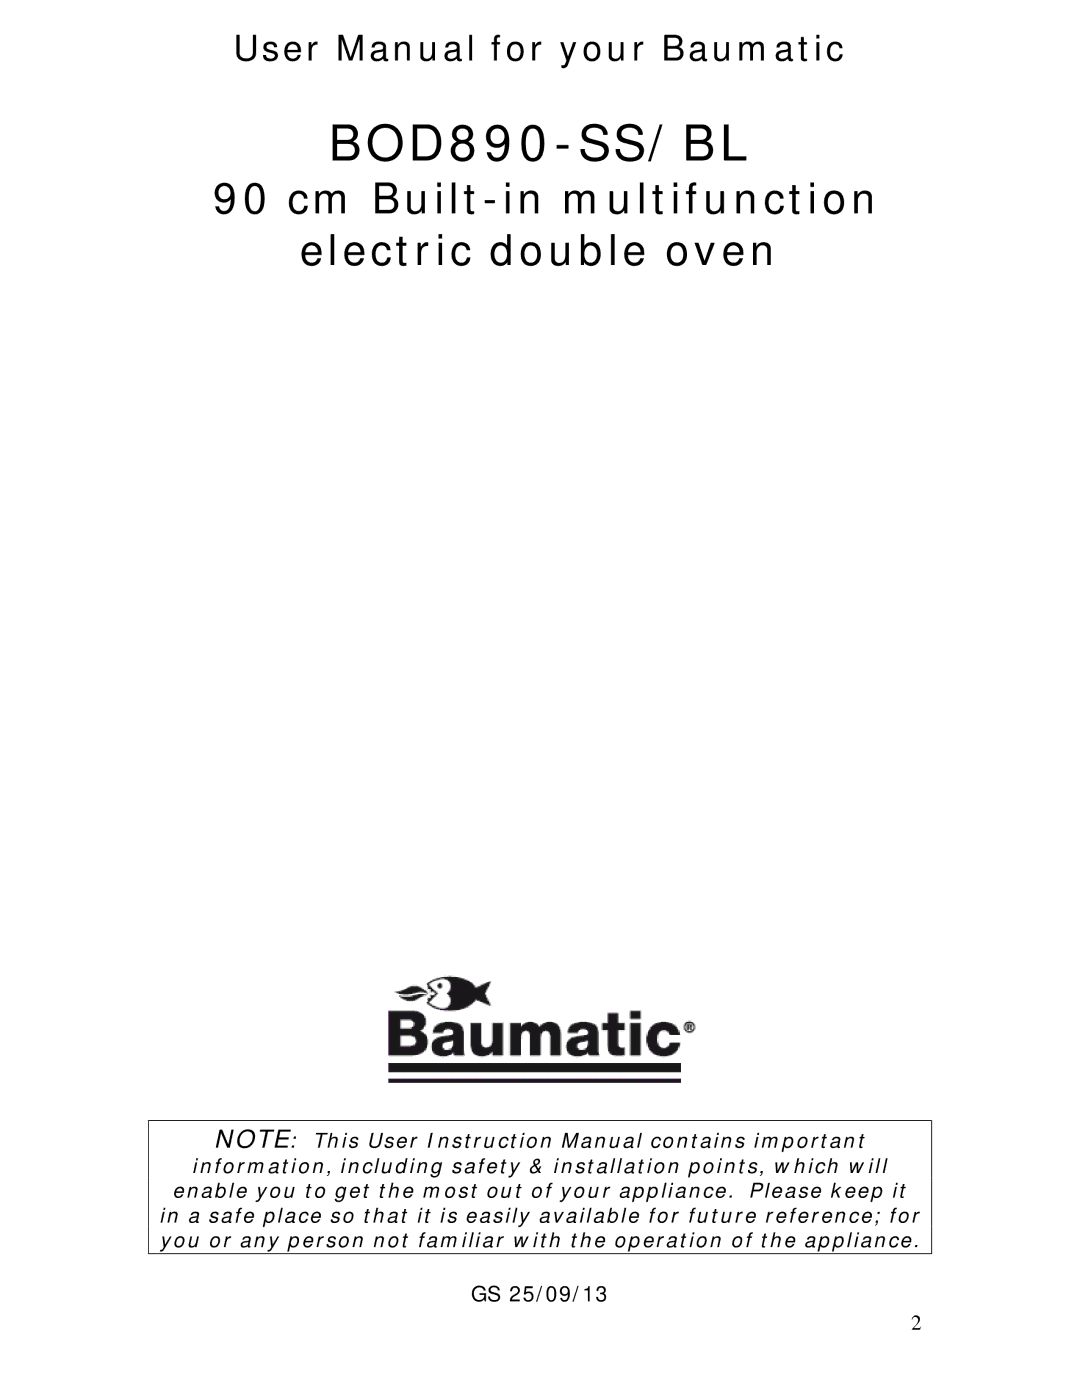 Baumatic BOD890BL manual BOD890-SS/BL 